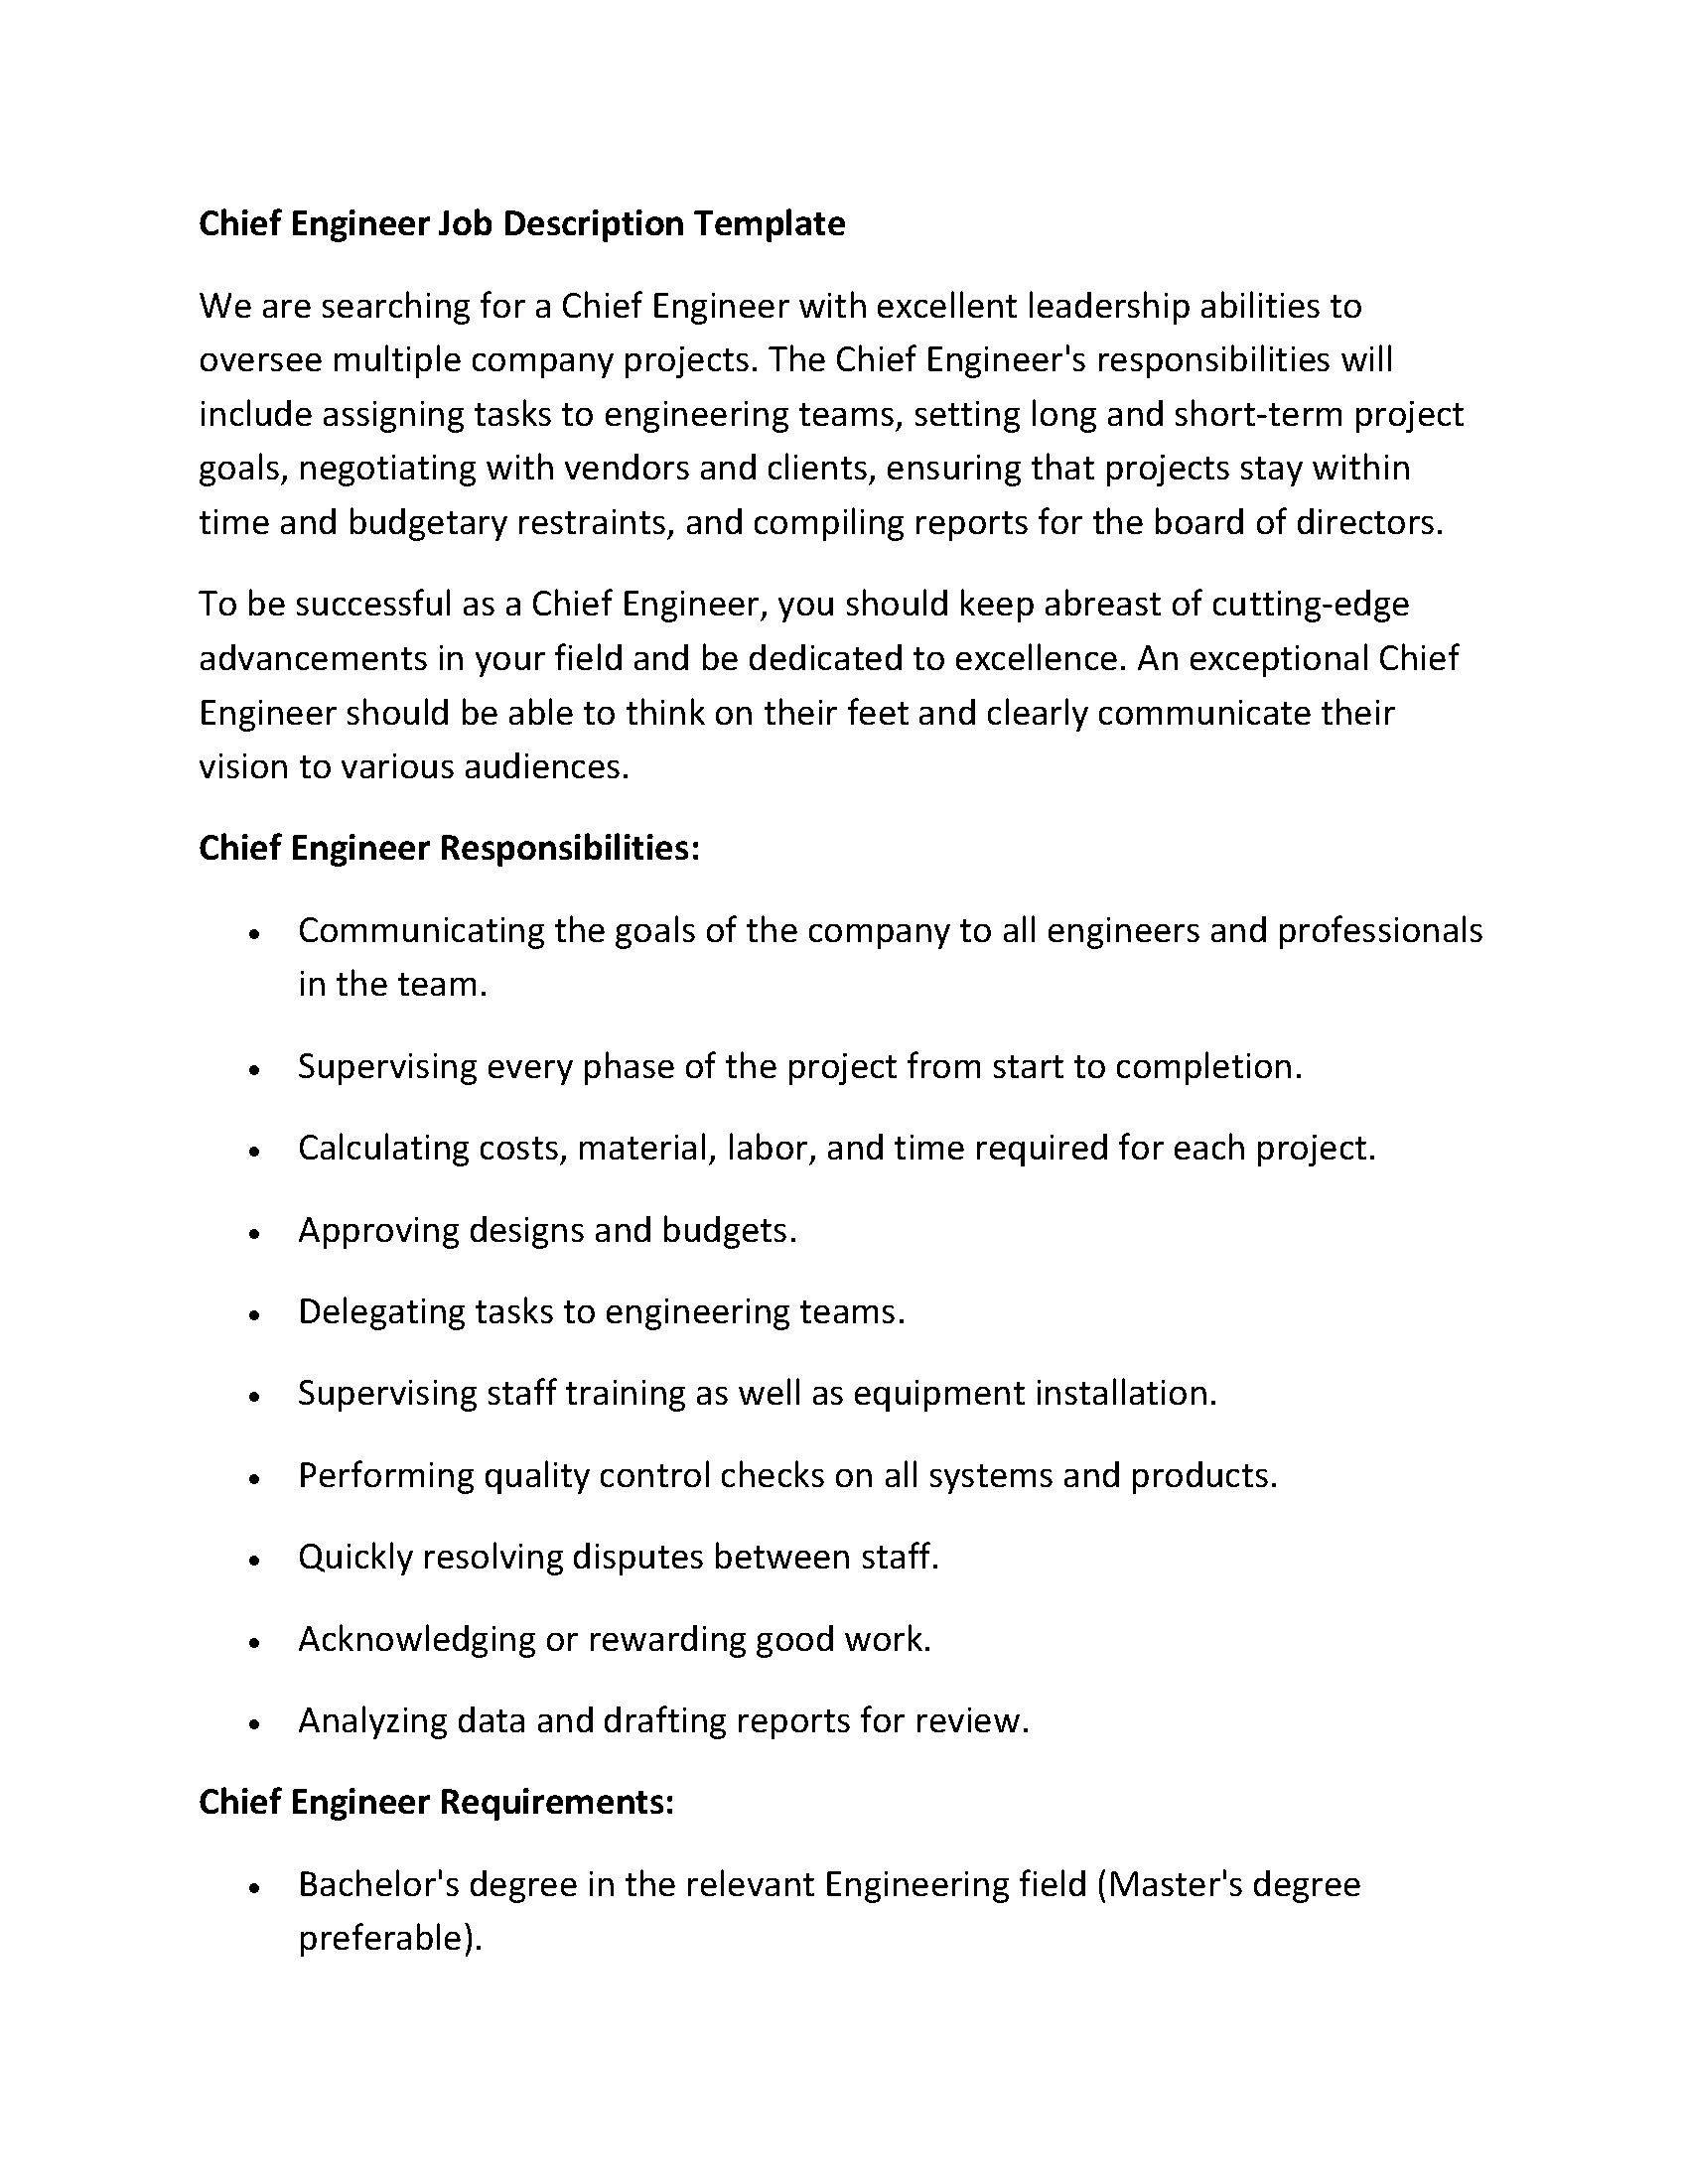 Chief Engineer Job Description Template